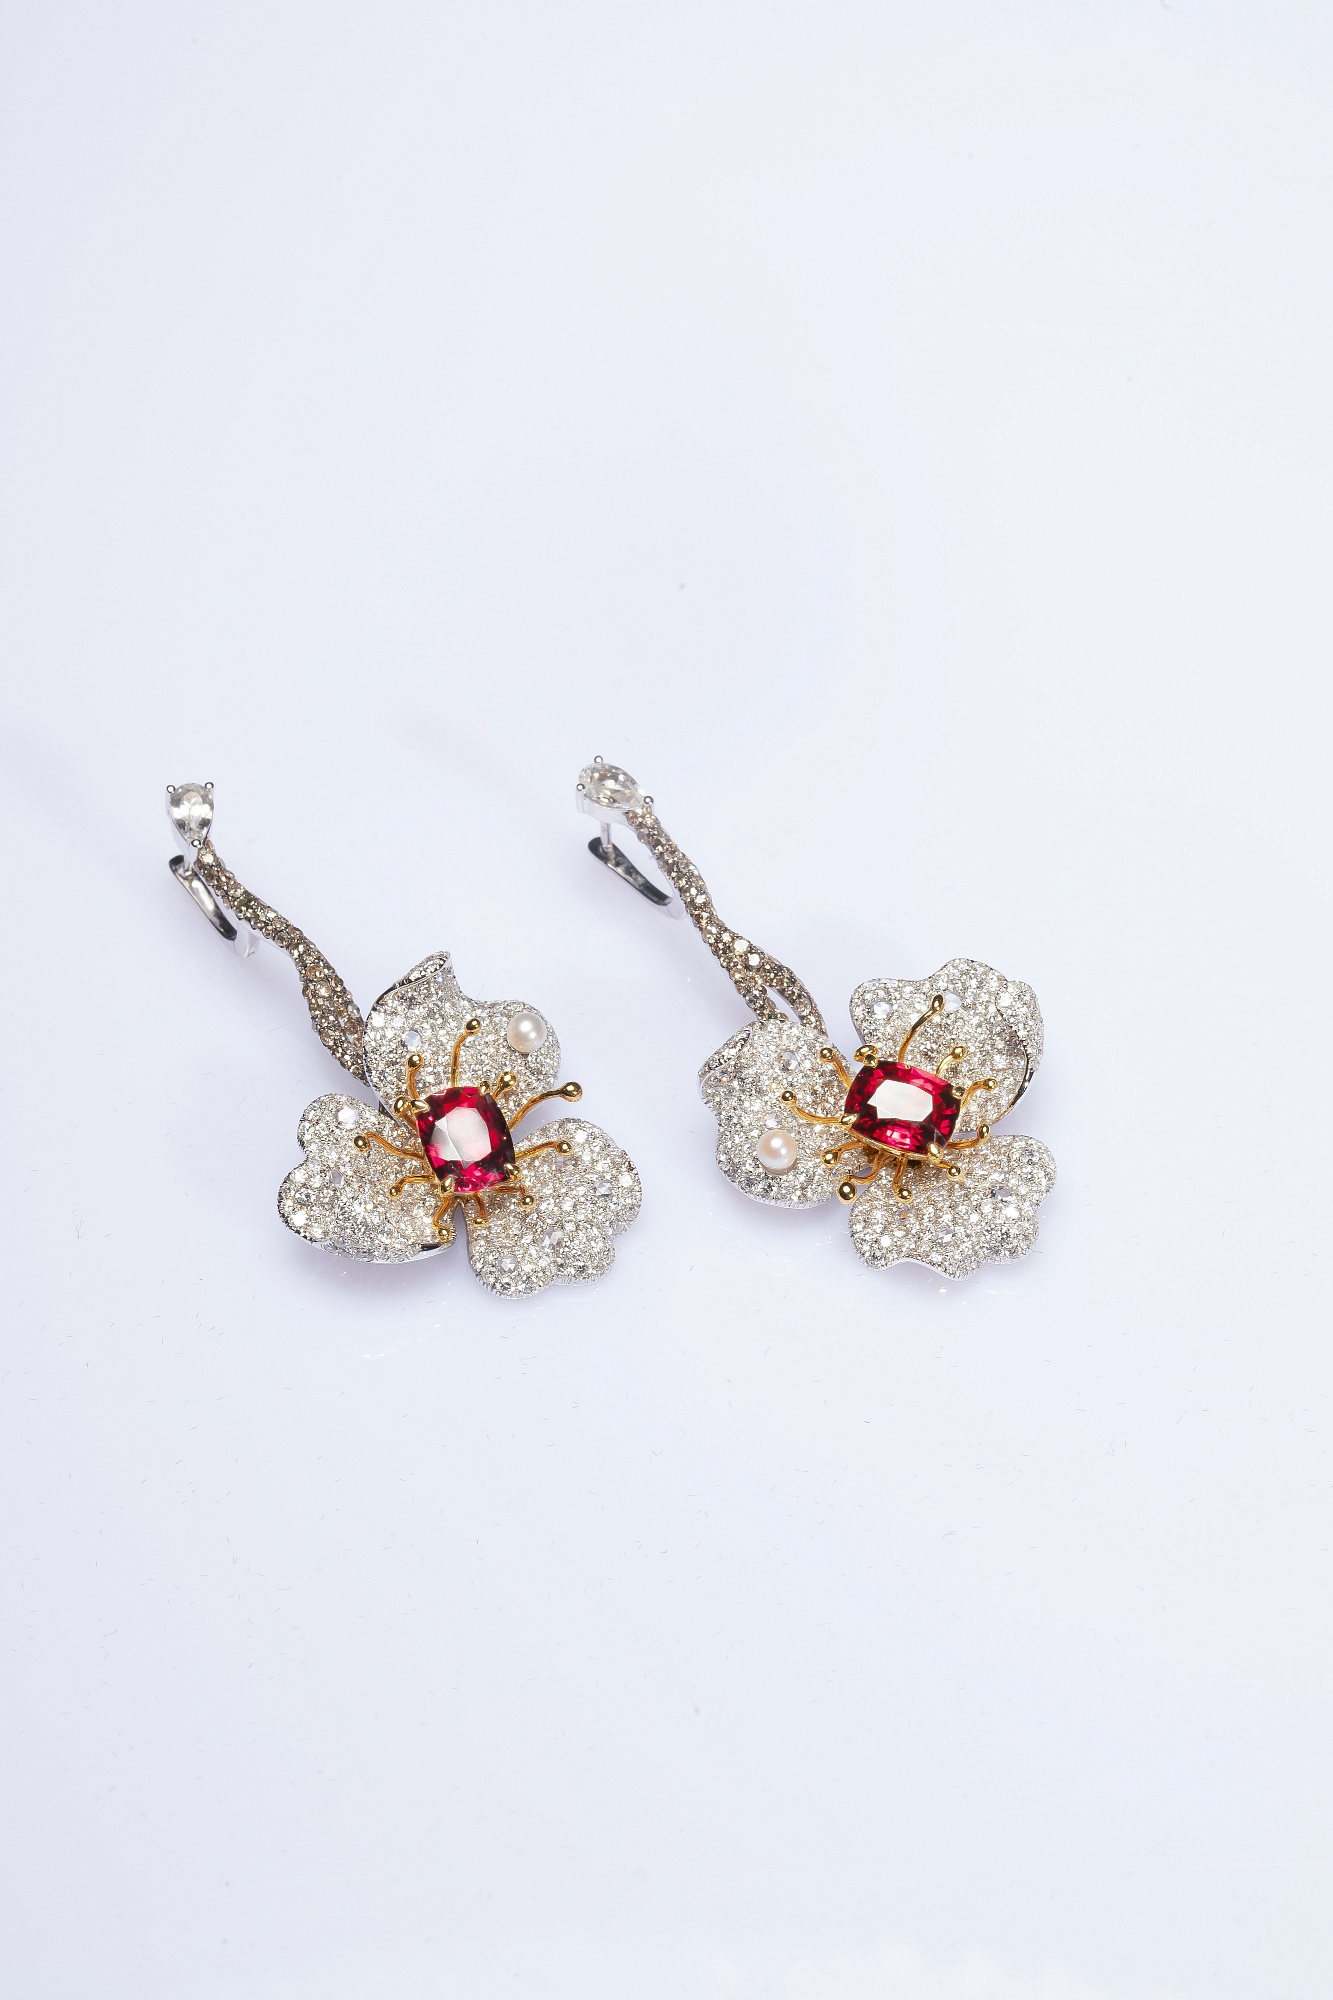 Earrings collection Oriental Garden, LAETITIA, Spinels, Diamonds, Brown Diamonds, Sapphires, Pearl | Photo 2